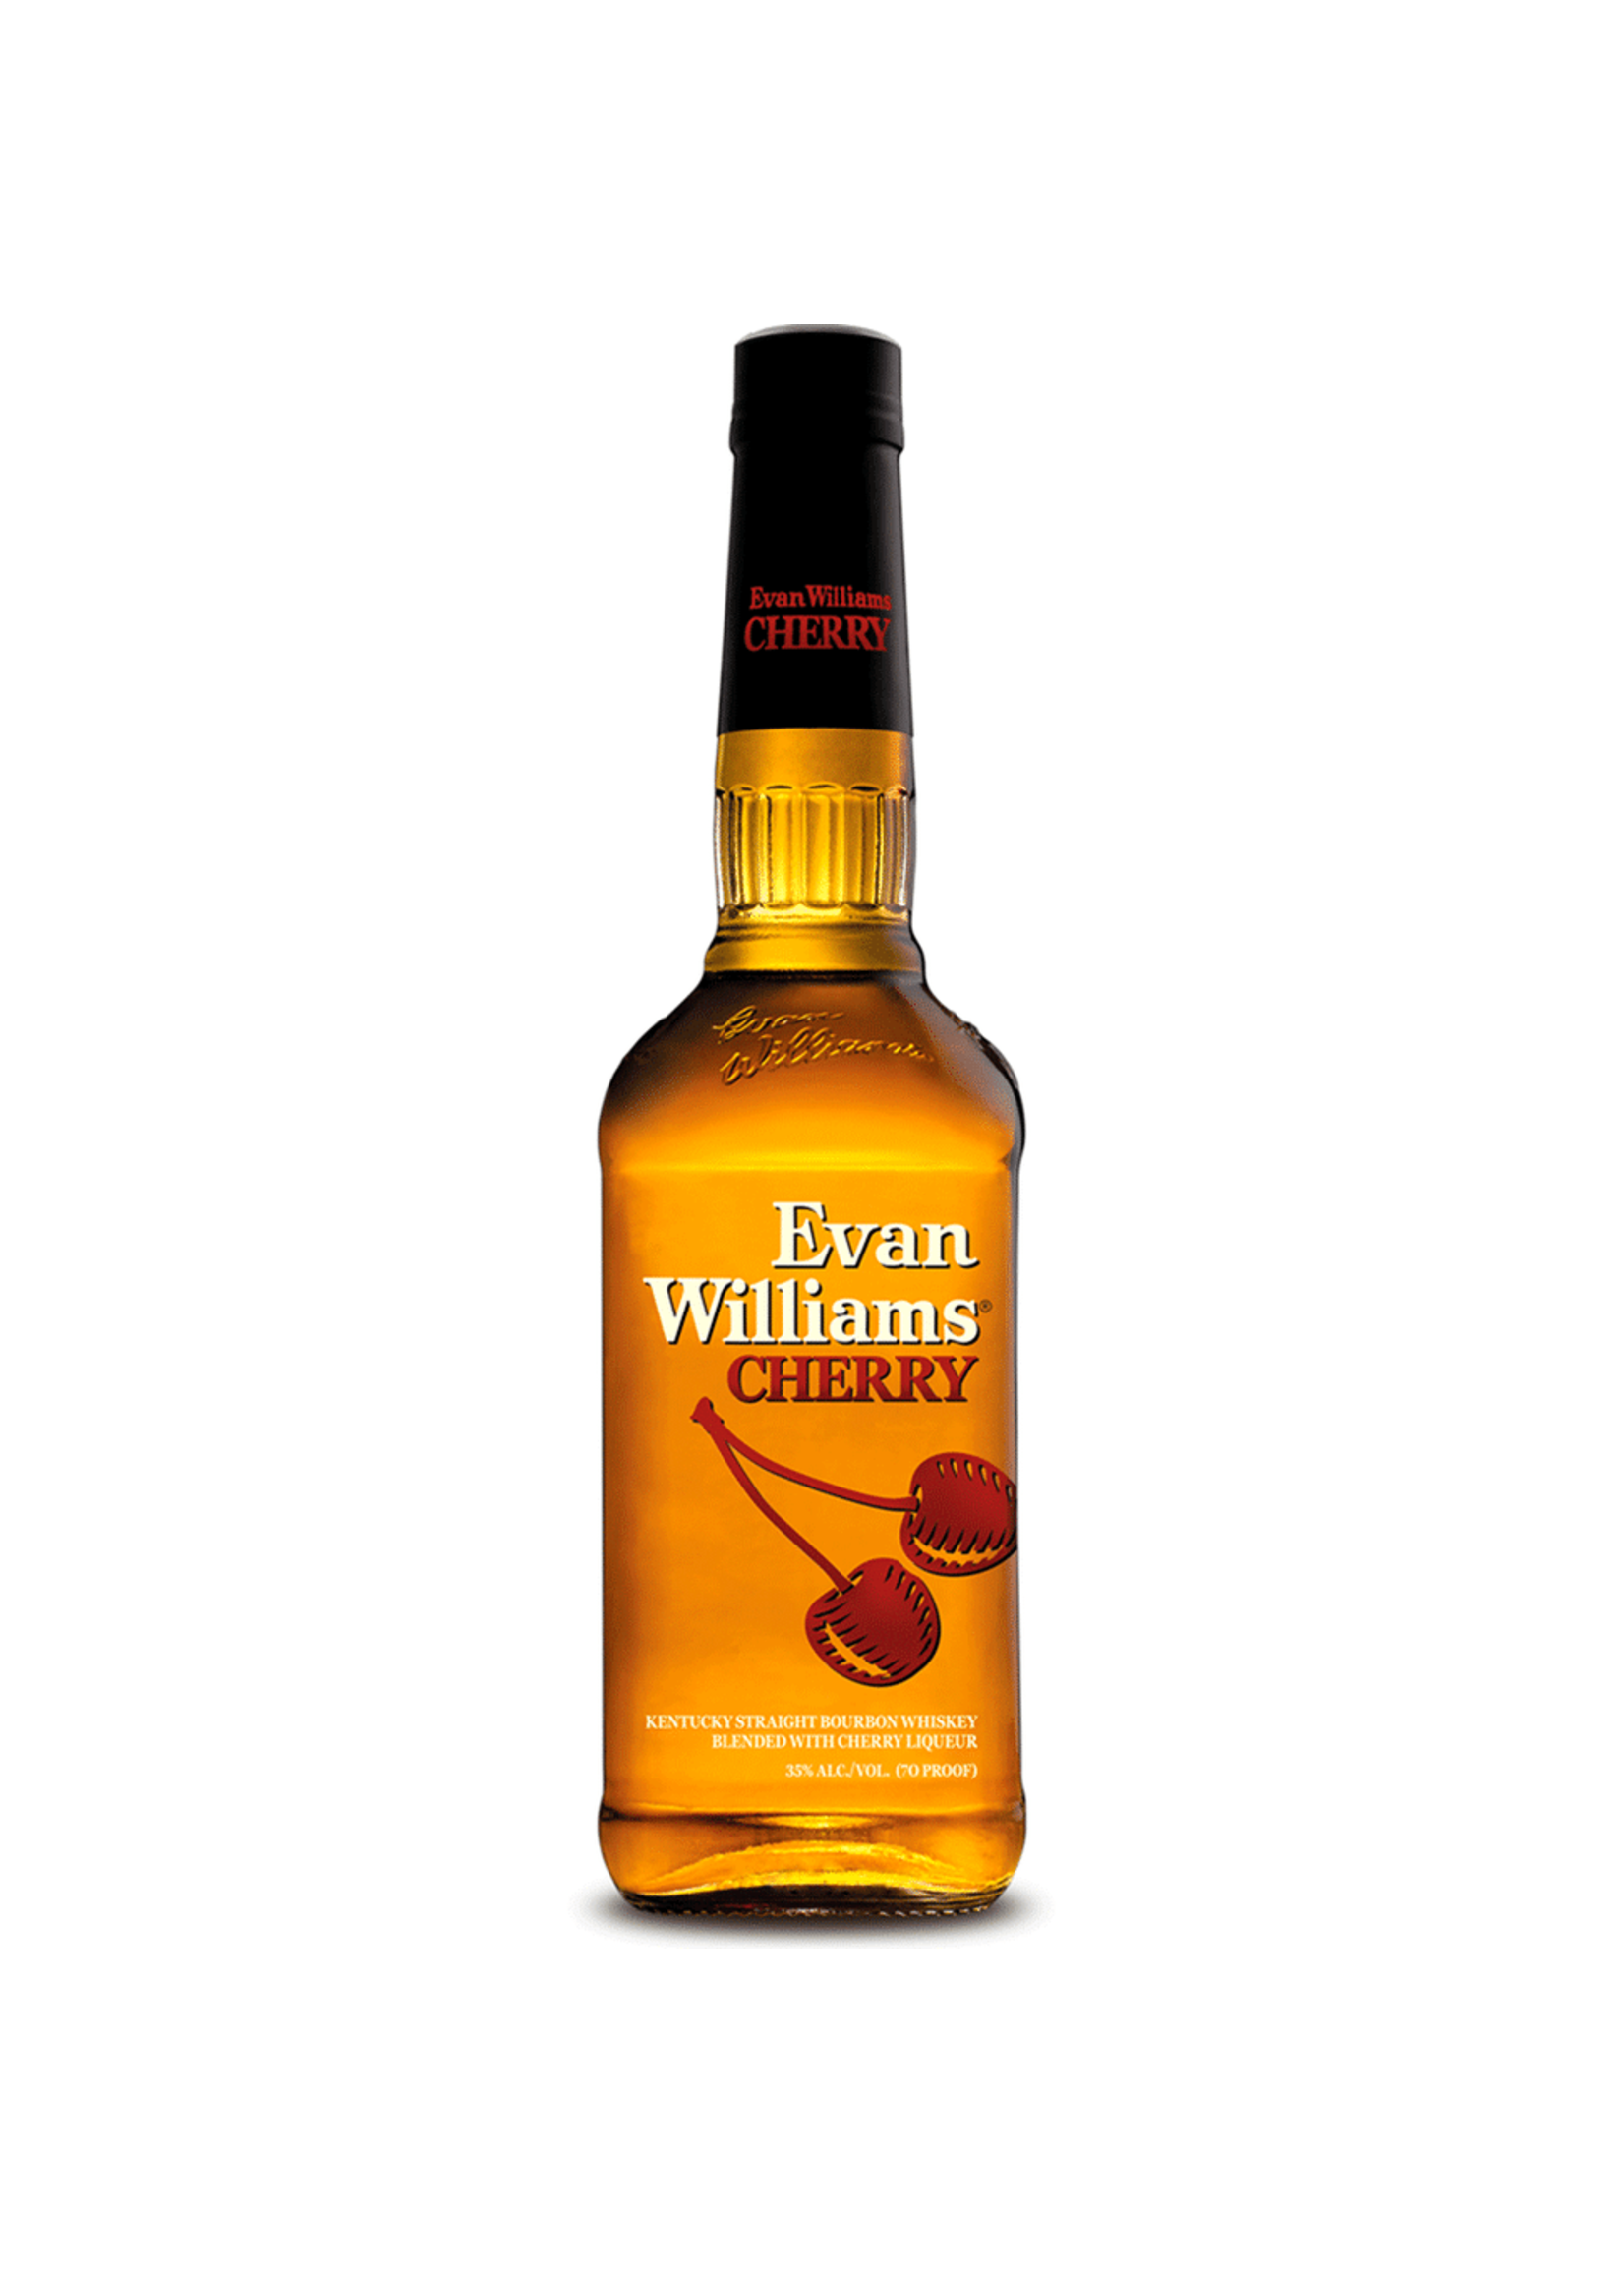 Evan Williams Bourbon Evan Williams Cherry Whiskey Liqueur 65Proof 750ml